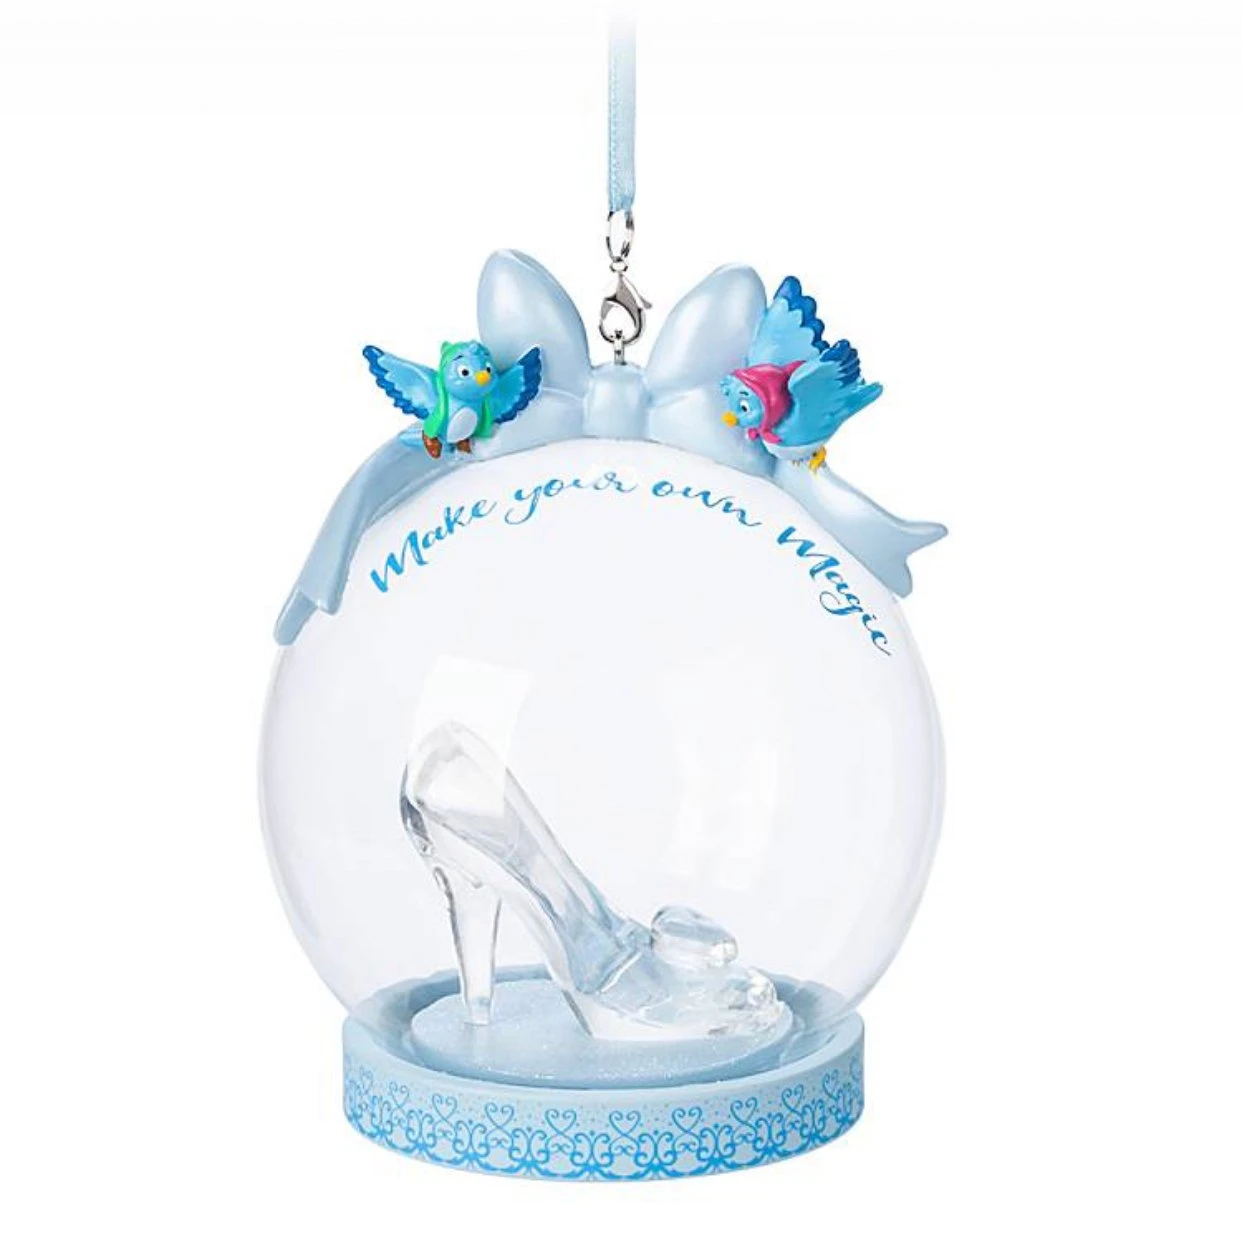 item Ornament - Cinderella Glass Slipper Globe - Make Your Own Magic dc18h72965083jpg